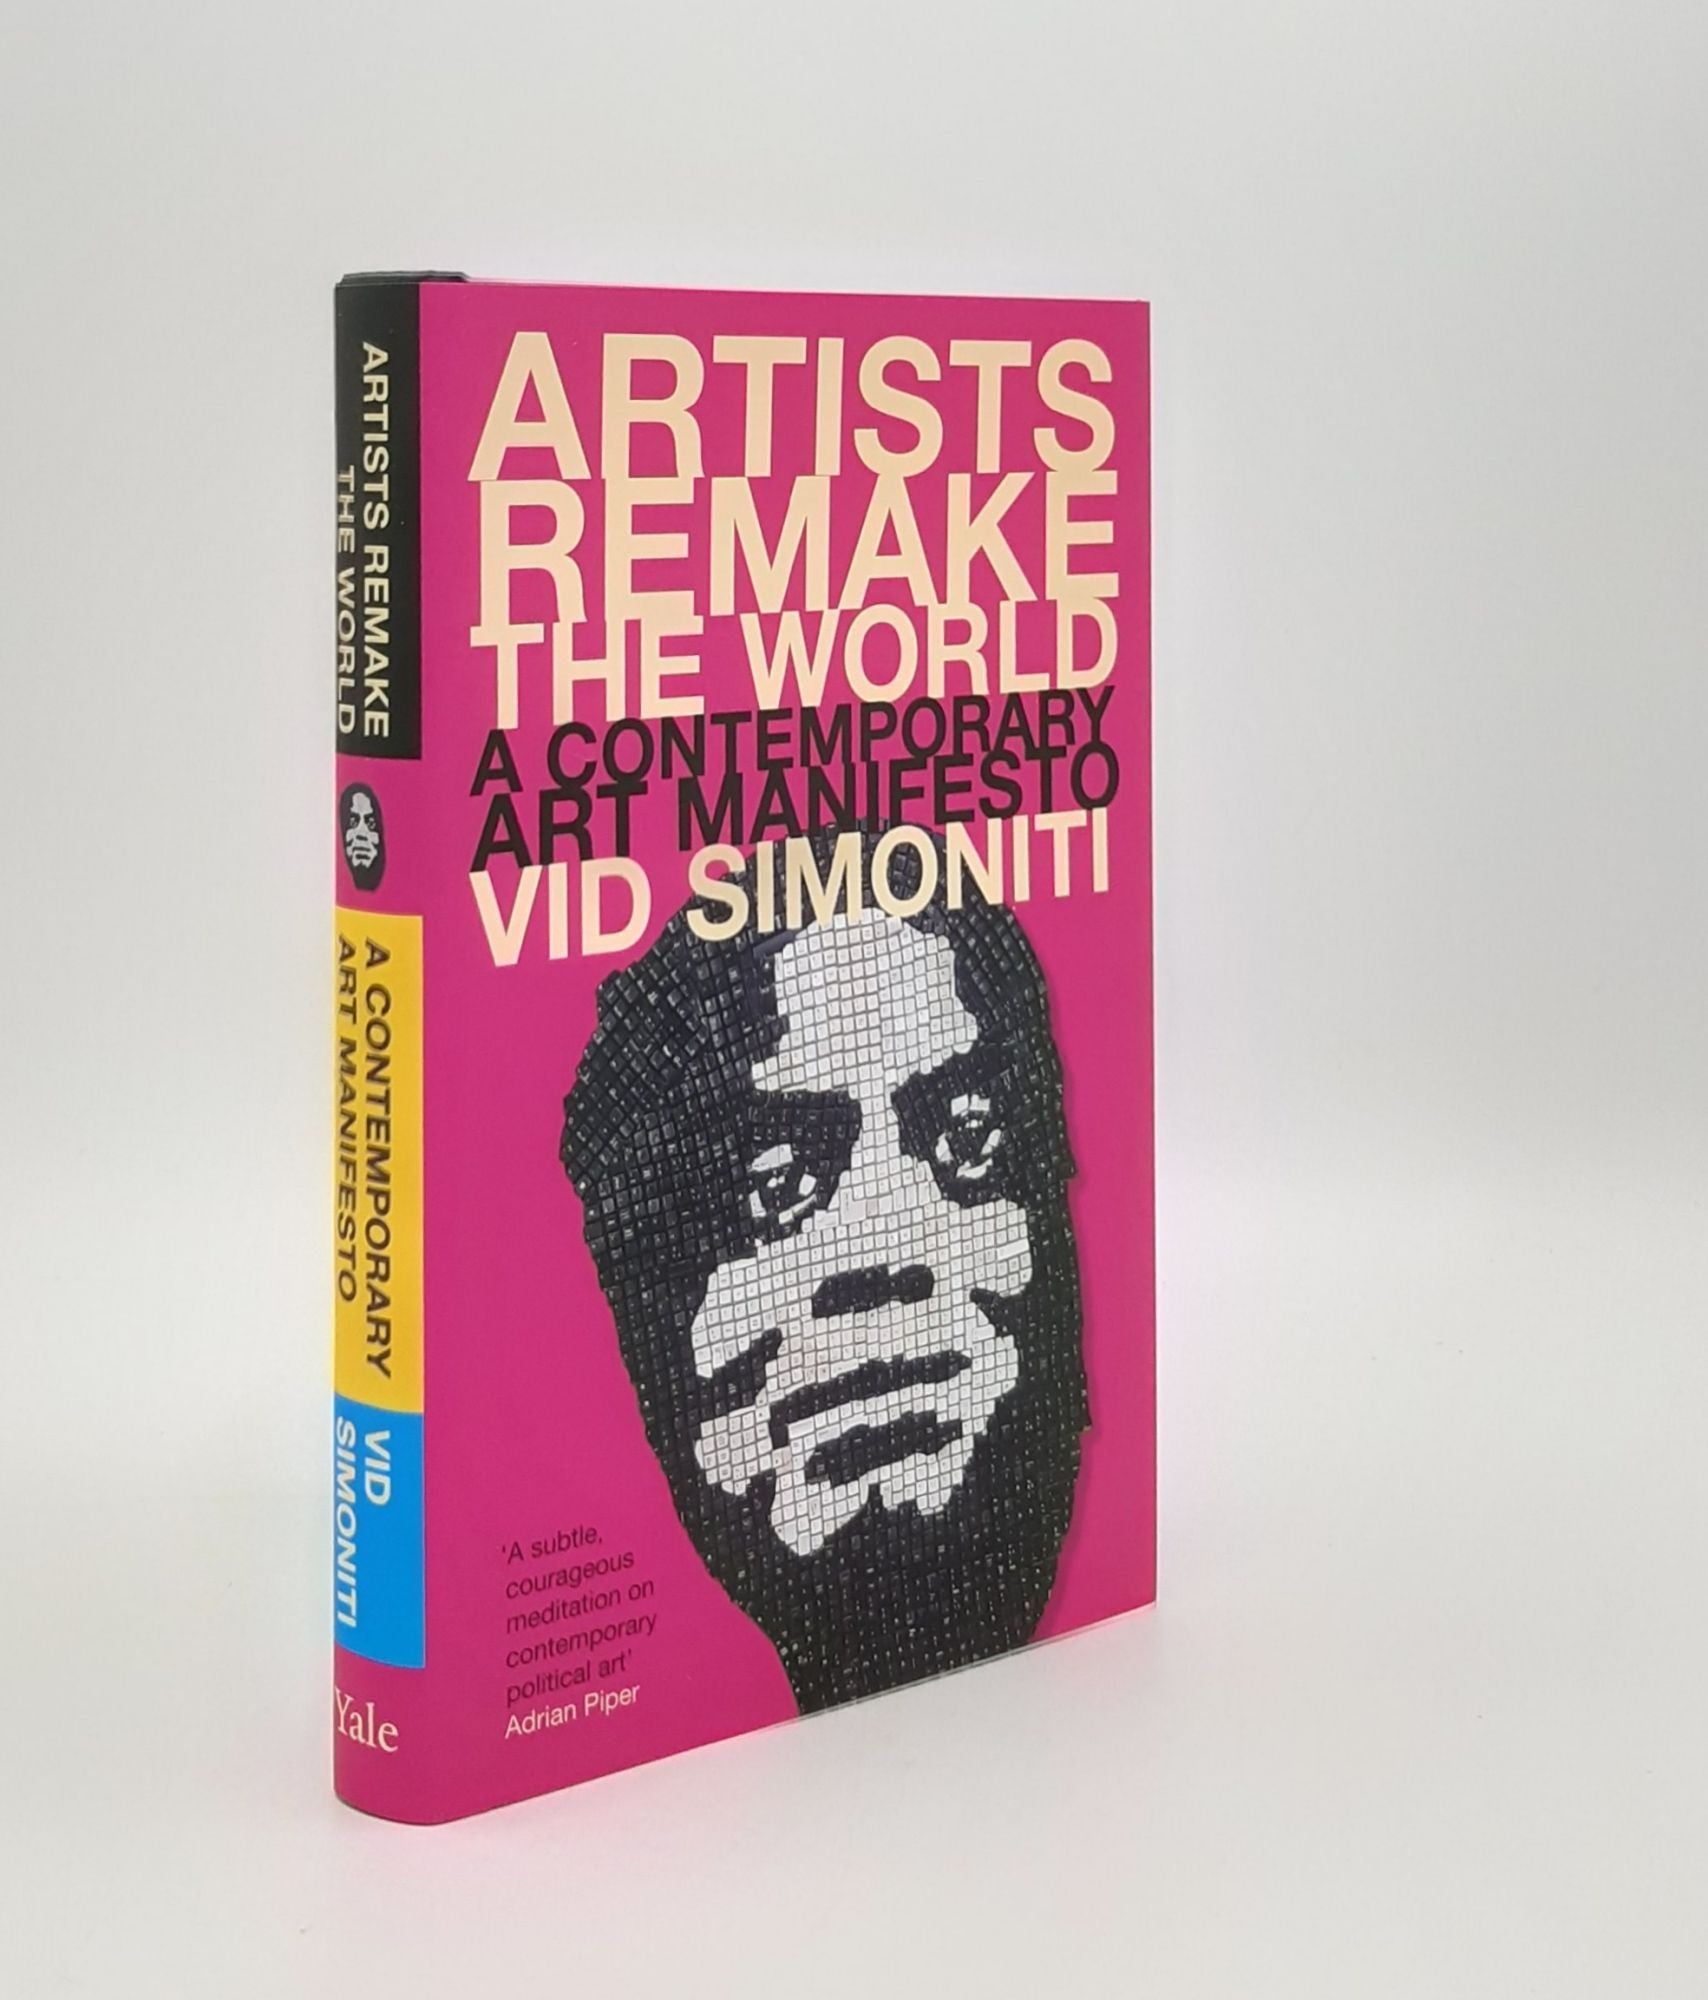 SIMONITI Vid - Artists Remake the World a Contemporary Art Manifesto